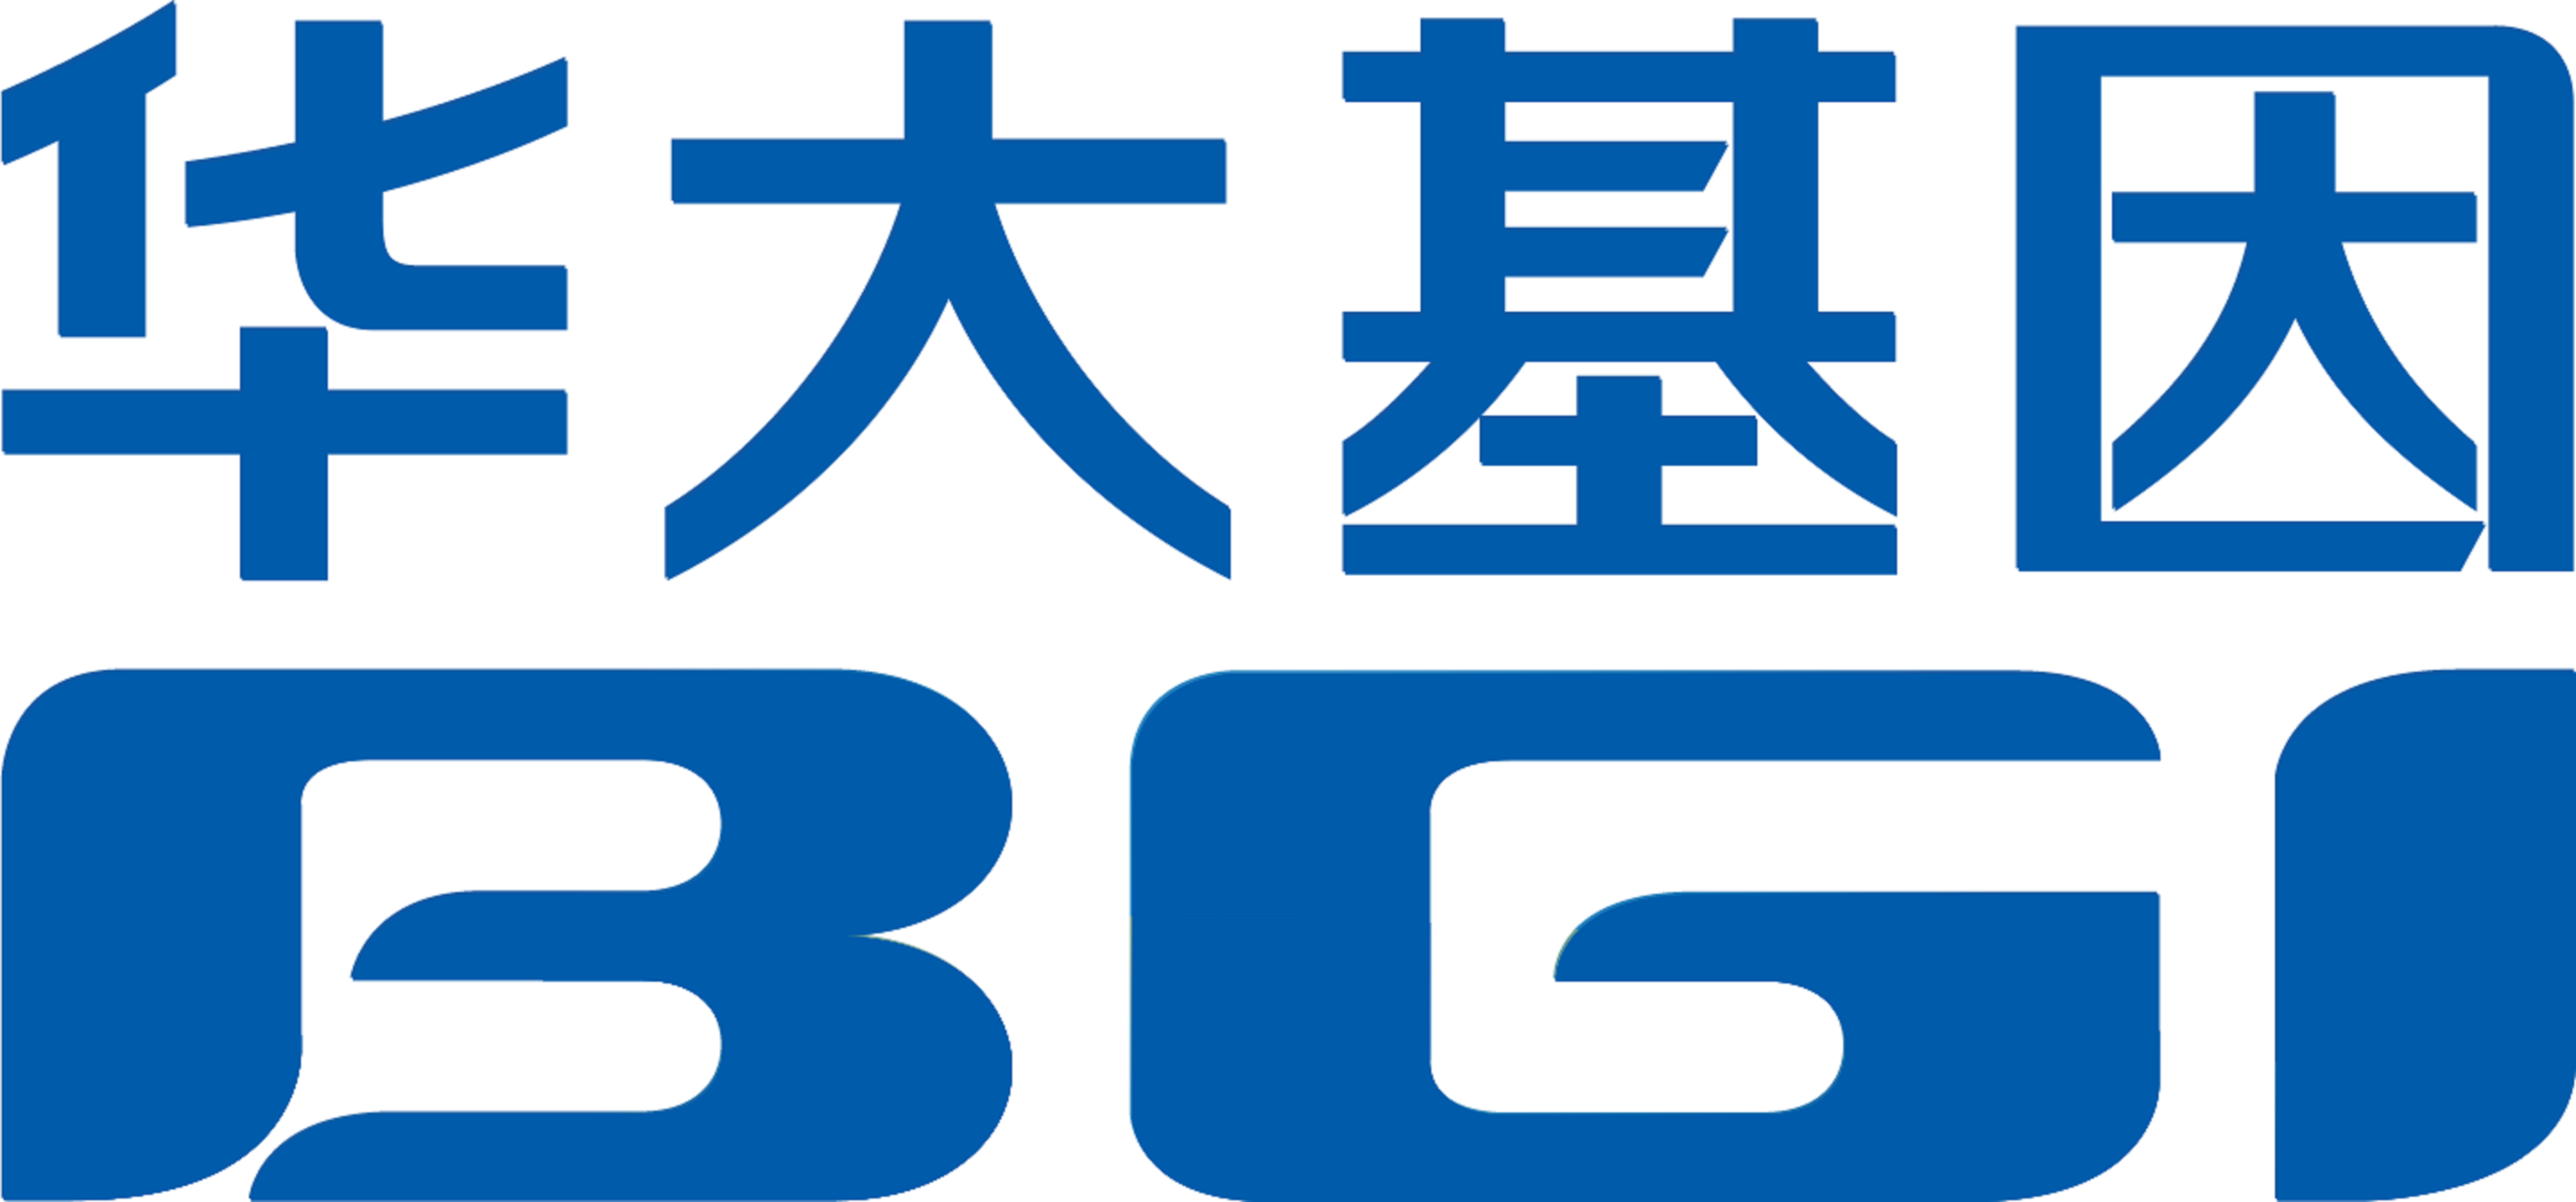 BGI Genomics Co. Ltd.